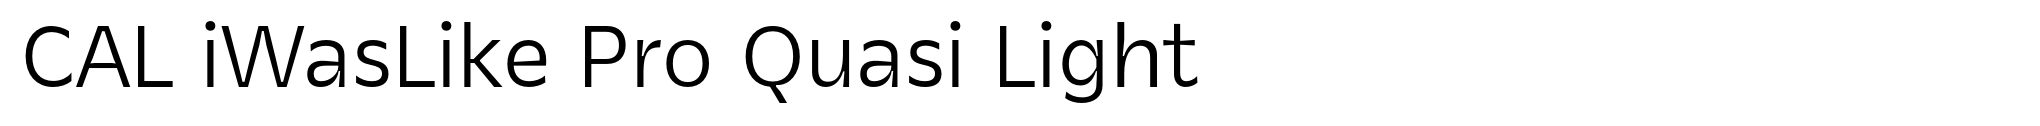 CAL iWasLike Pro Quasi Light image